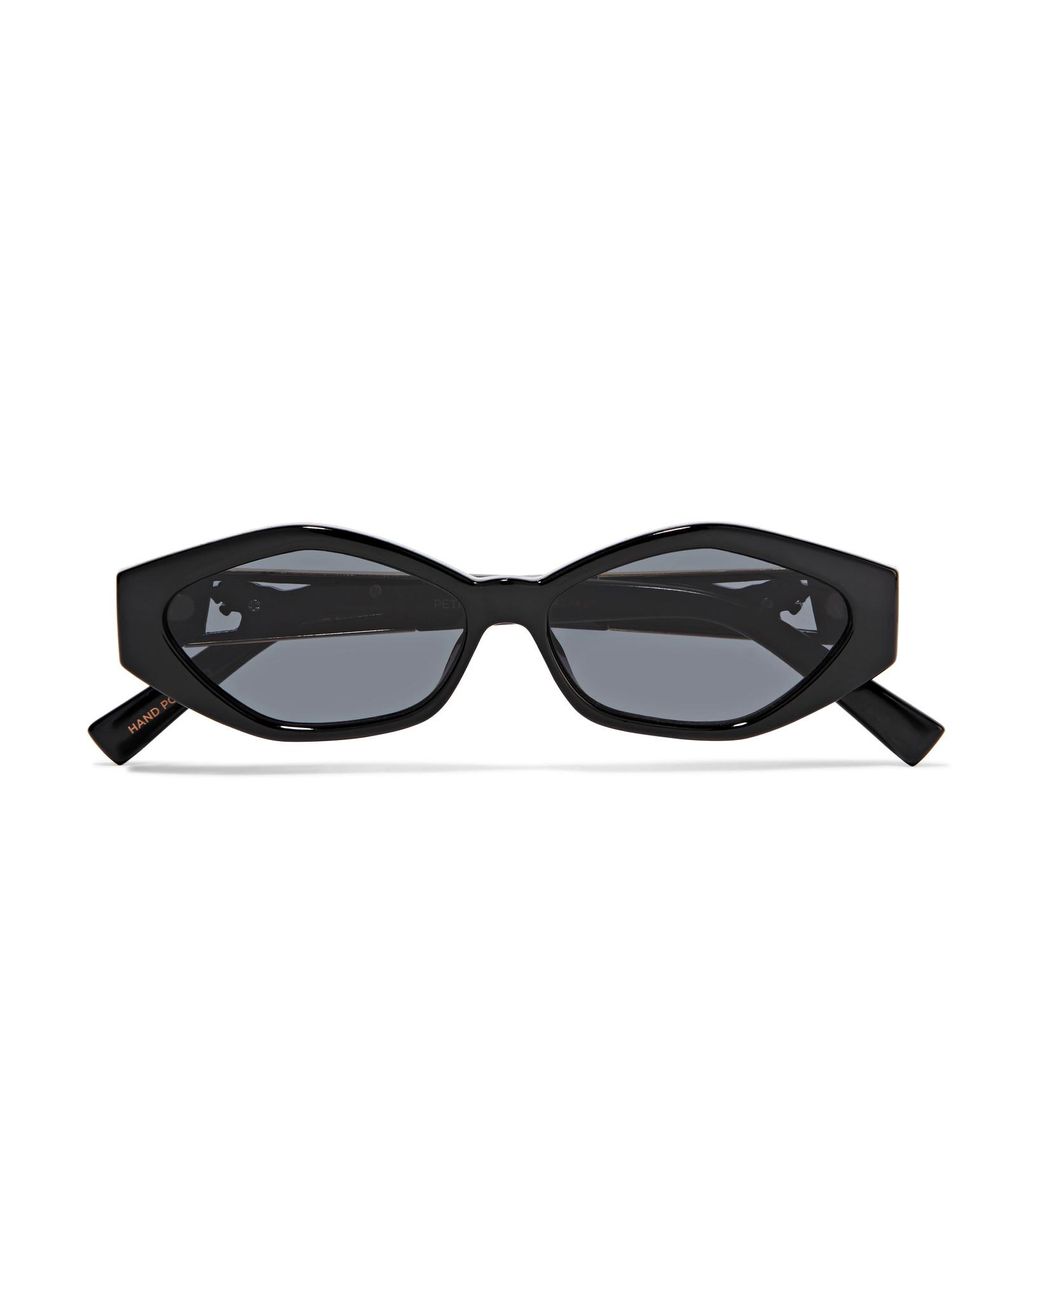 Le Specs Caliente Cat-eye-sonnenbrille Aus Azetat Mit Goldfarbenen Details in Schwarz Damen Accessoires Sonnenbrillen 